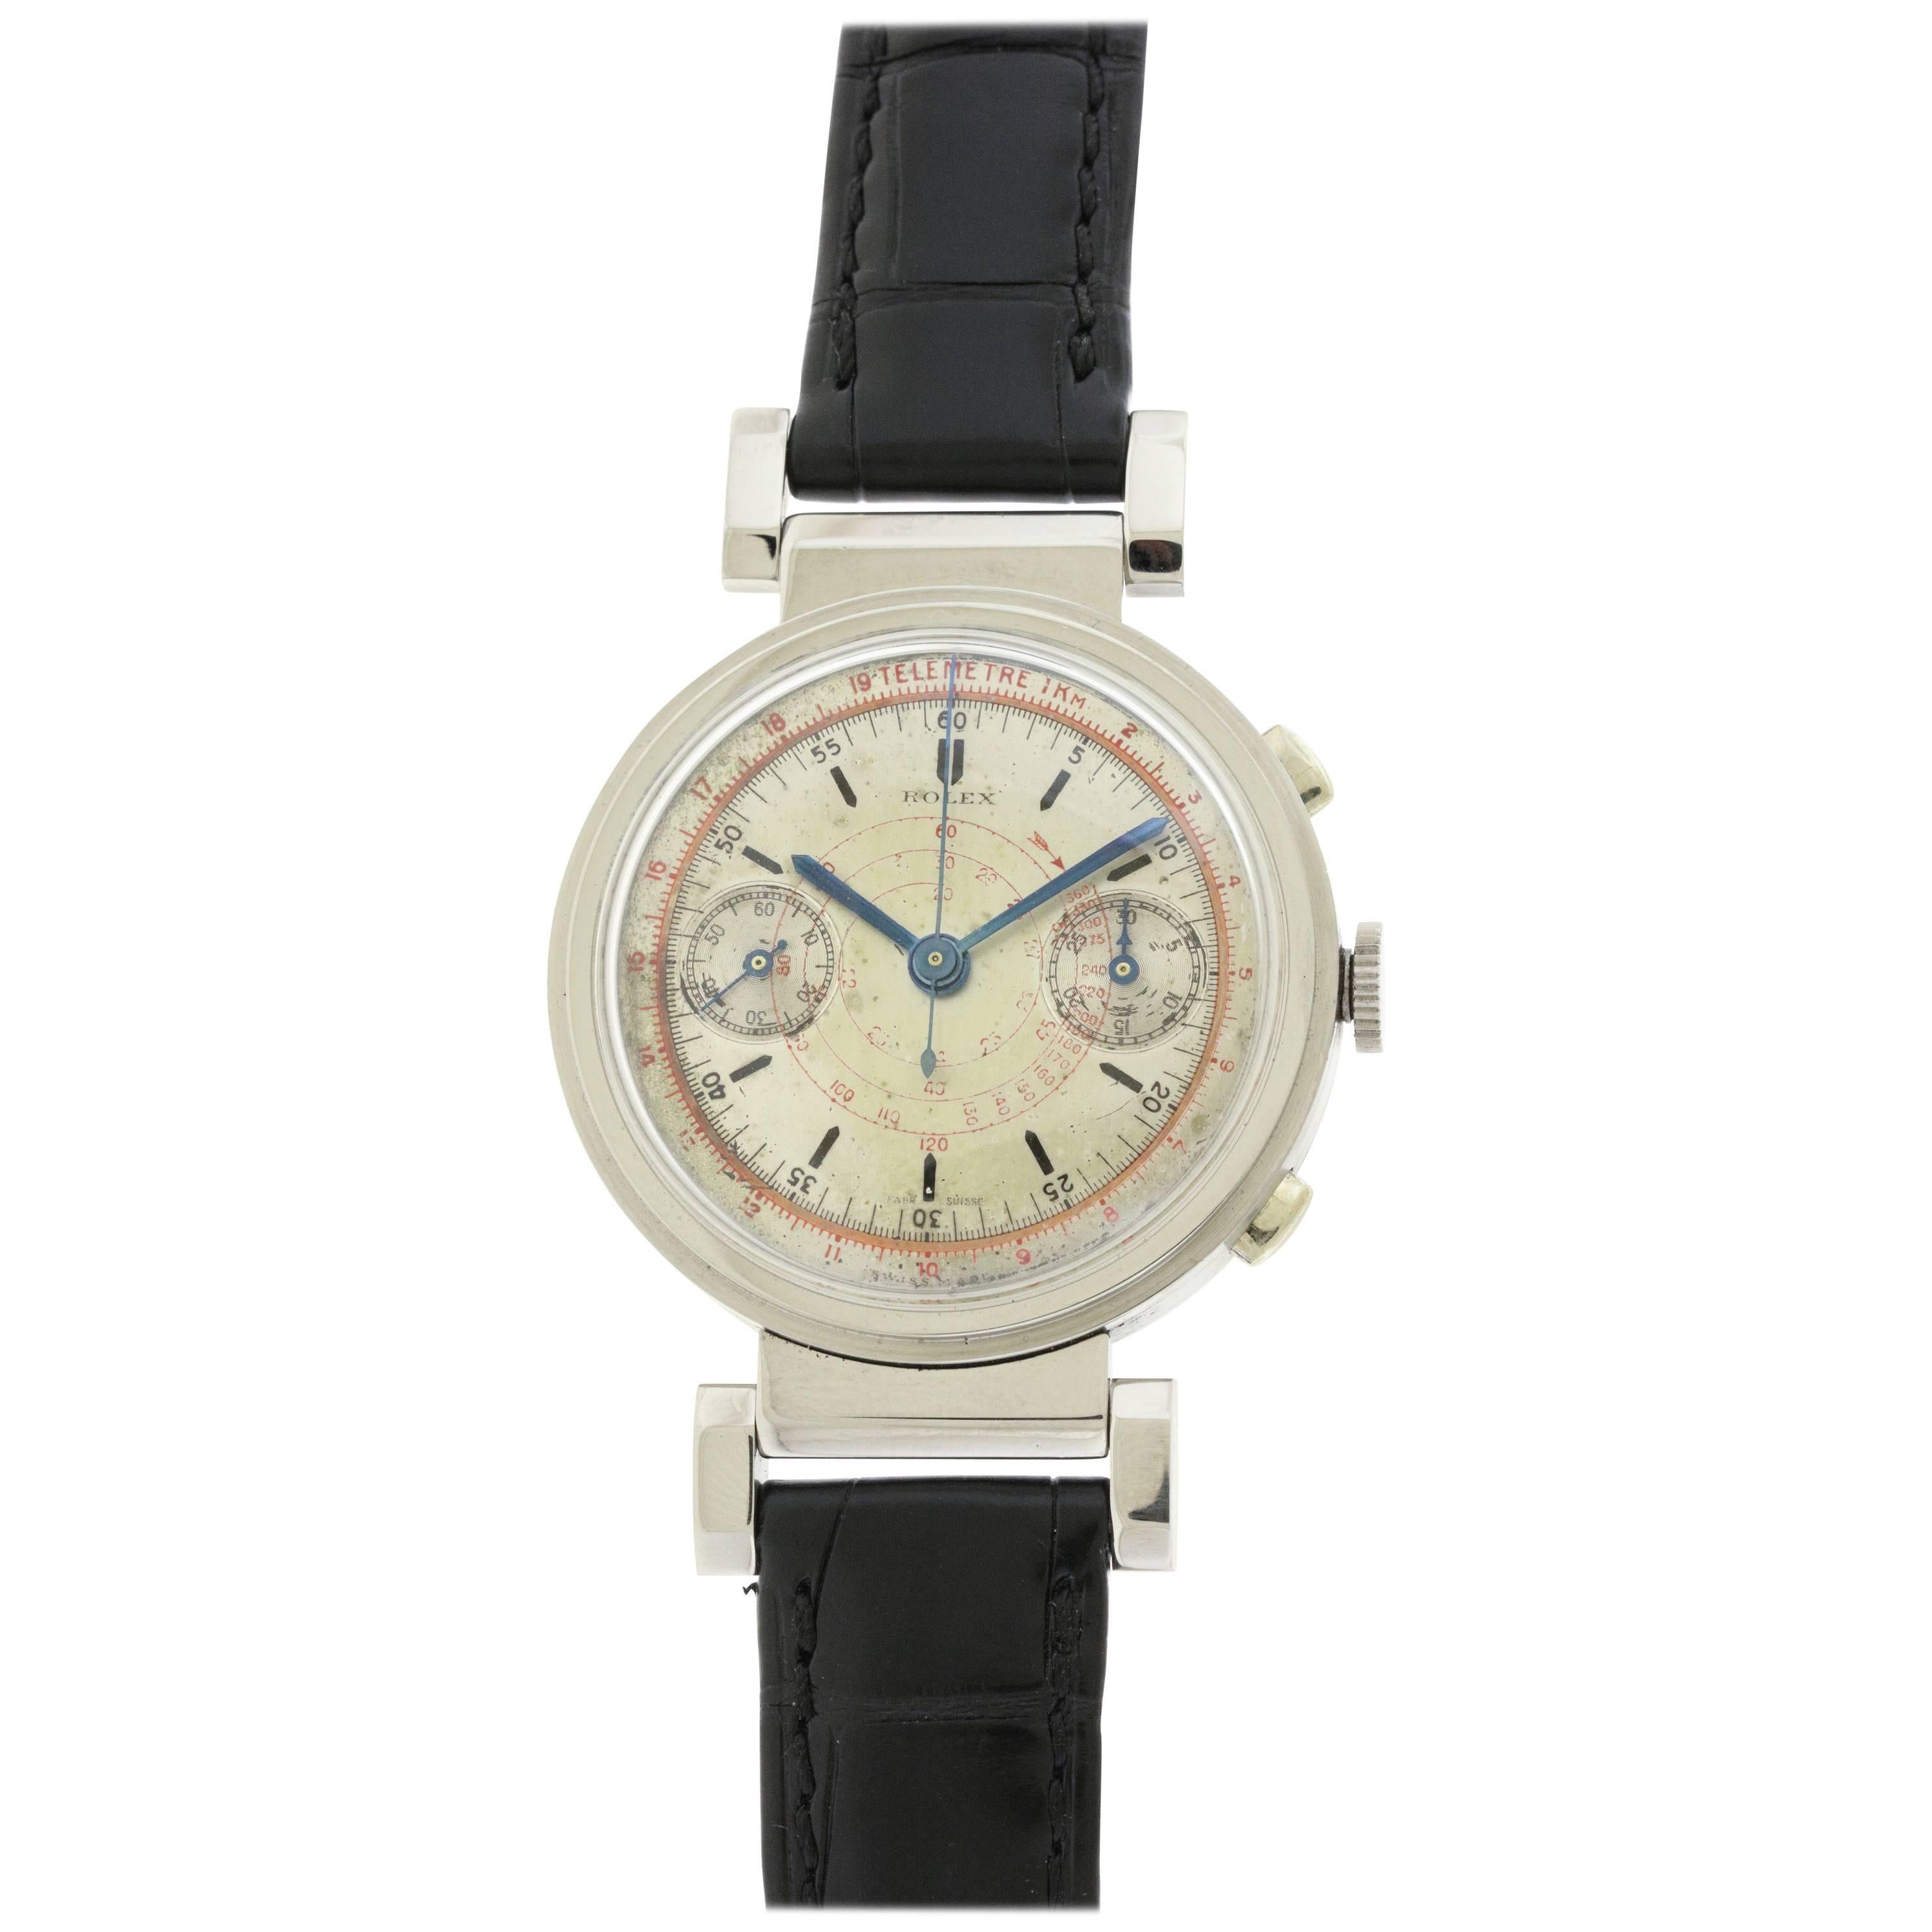 Rolex Stainless Steel Chronograph Wristwatch Ref 2634